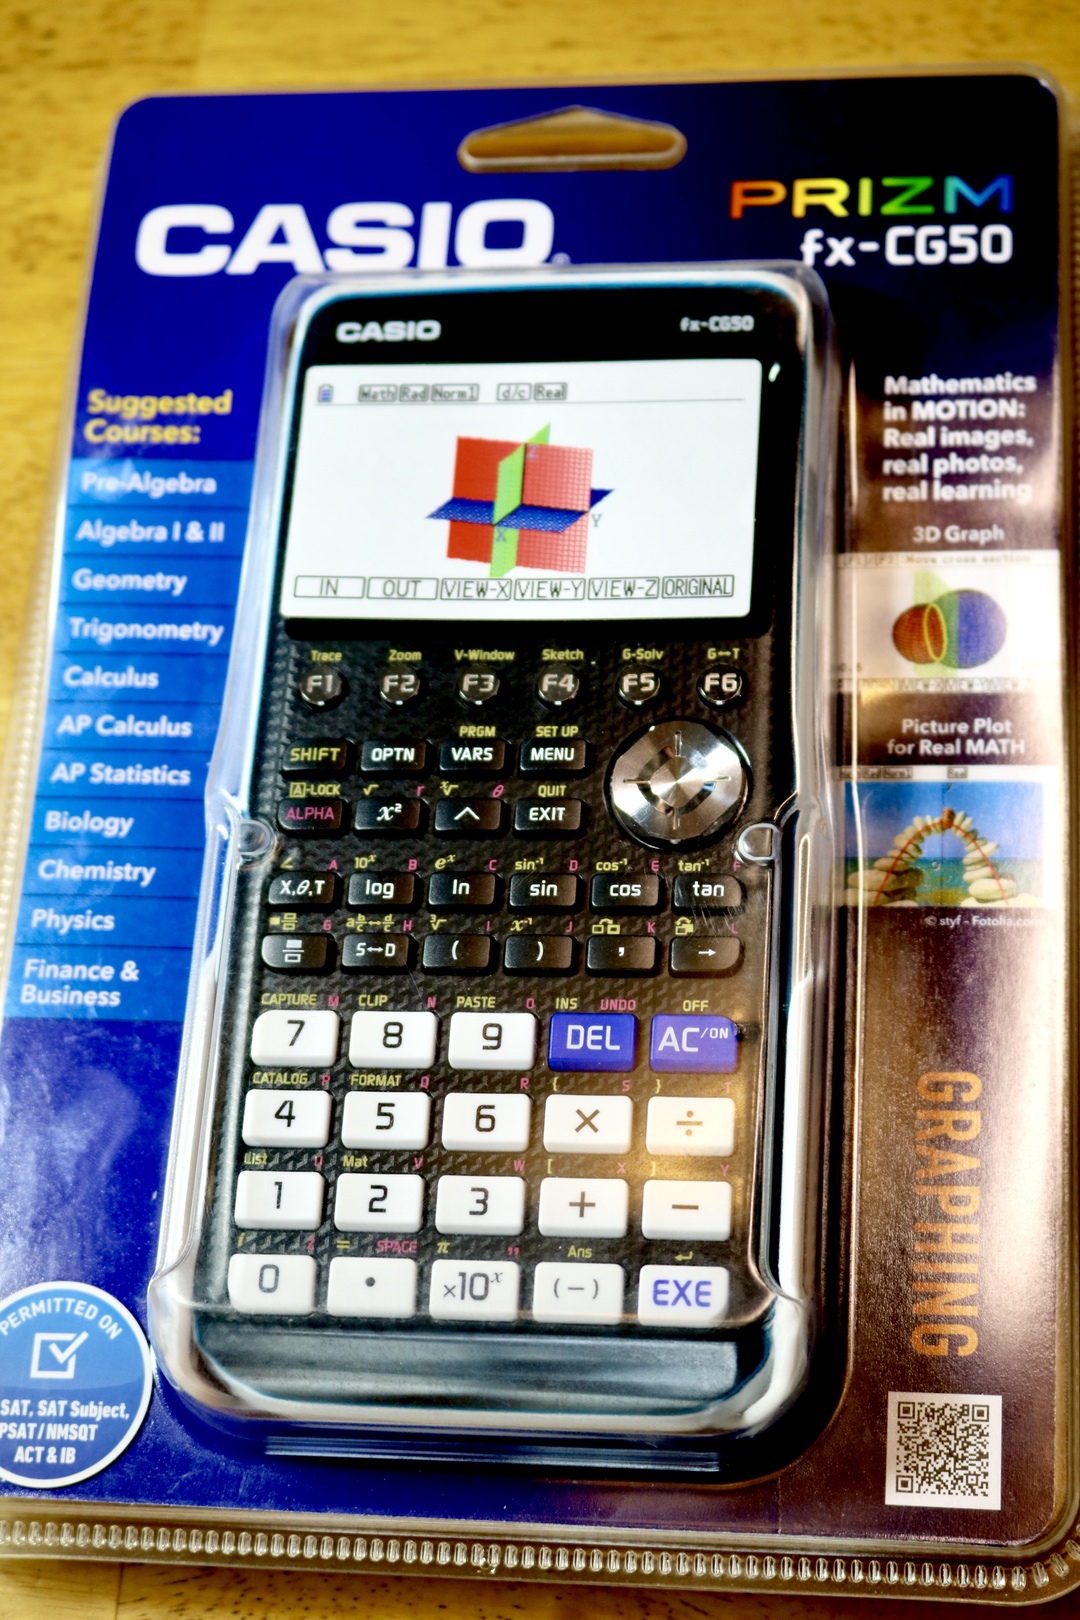 Casio PRIZM Graphing Calculator #Casio #GraphingCalculator #Calculator #math #education #school #ad